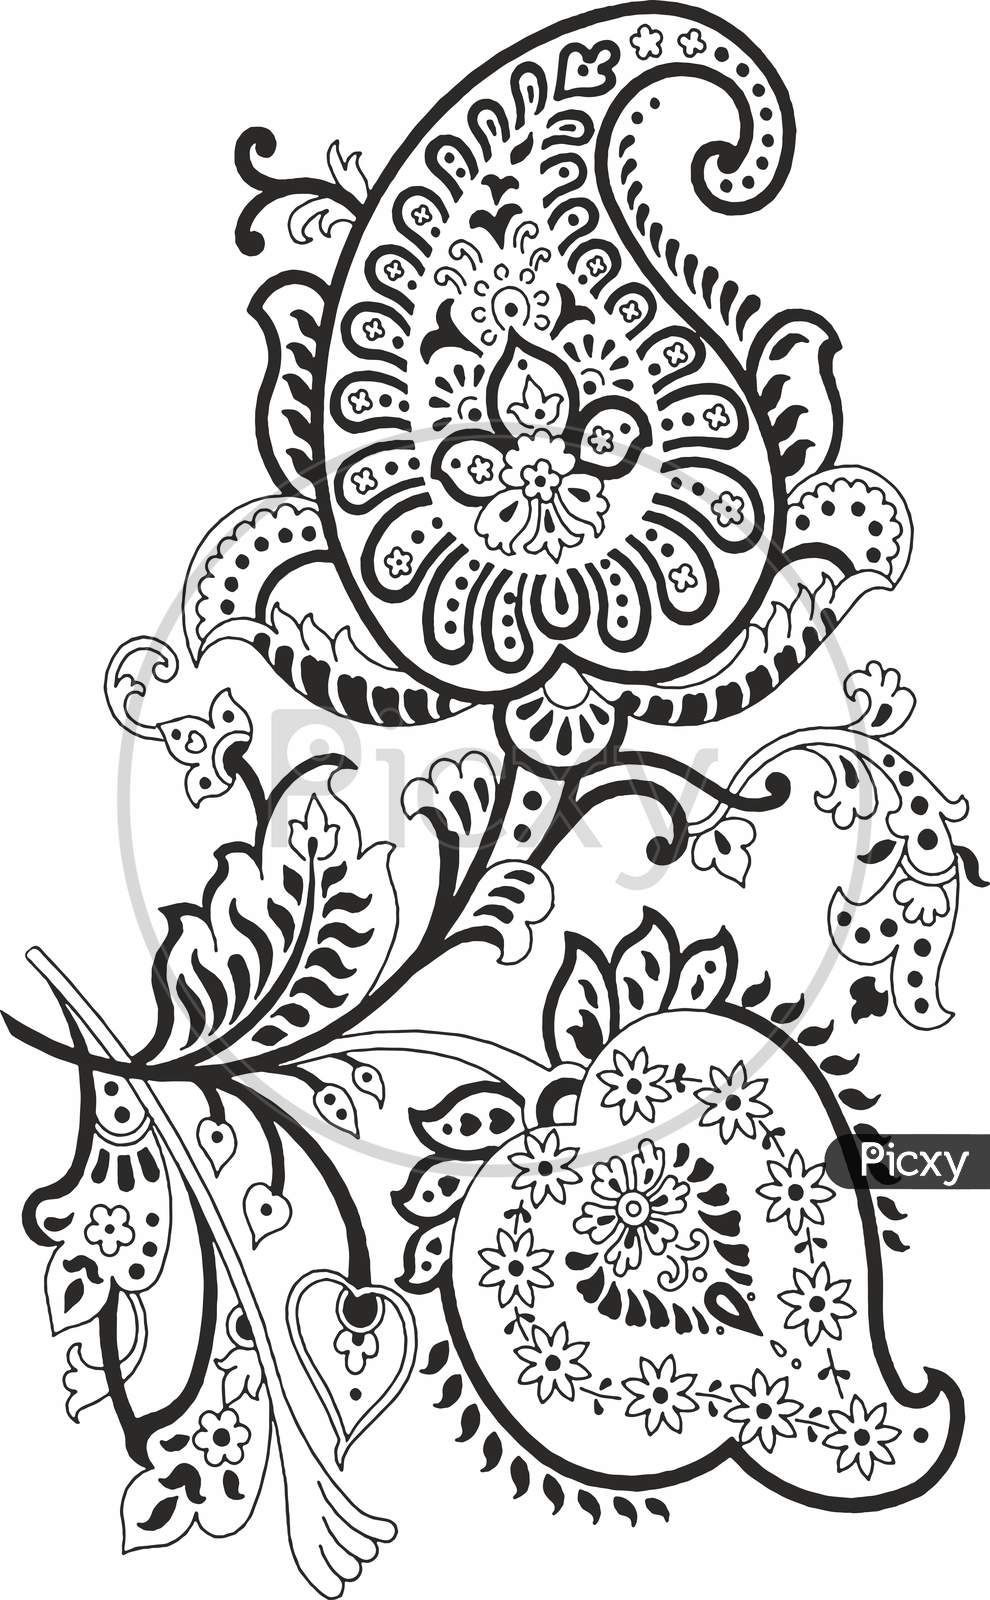 Rose flower line drawing style art design Vector Image-saigonsouth.com.vn